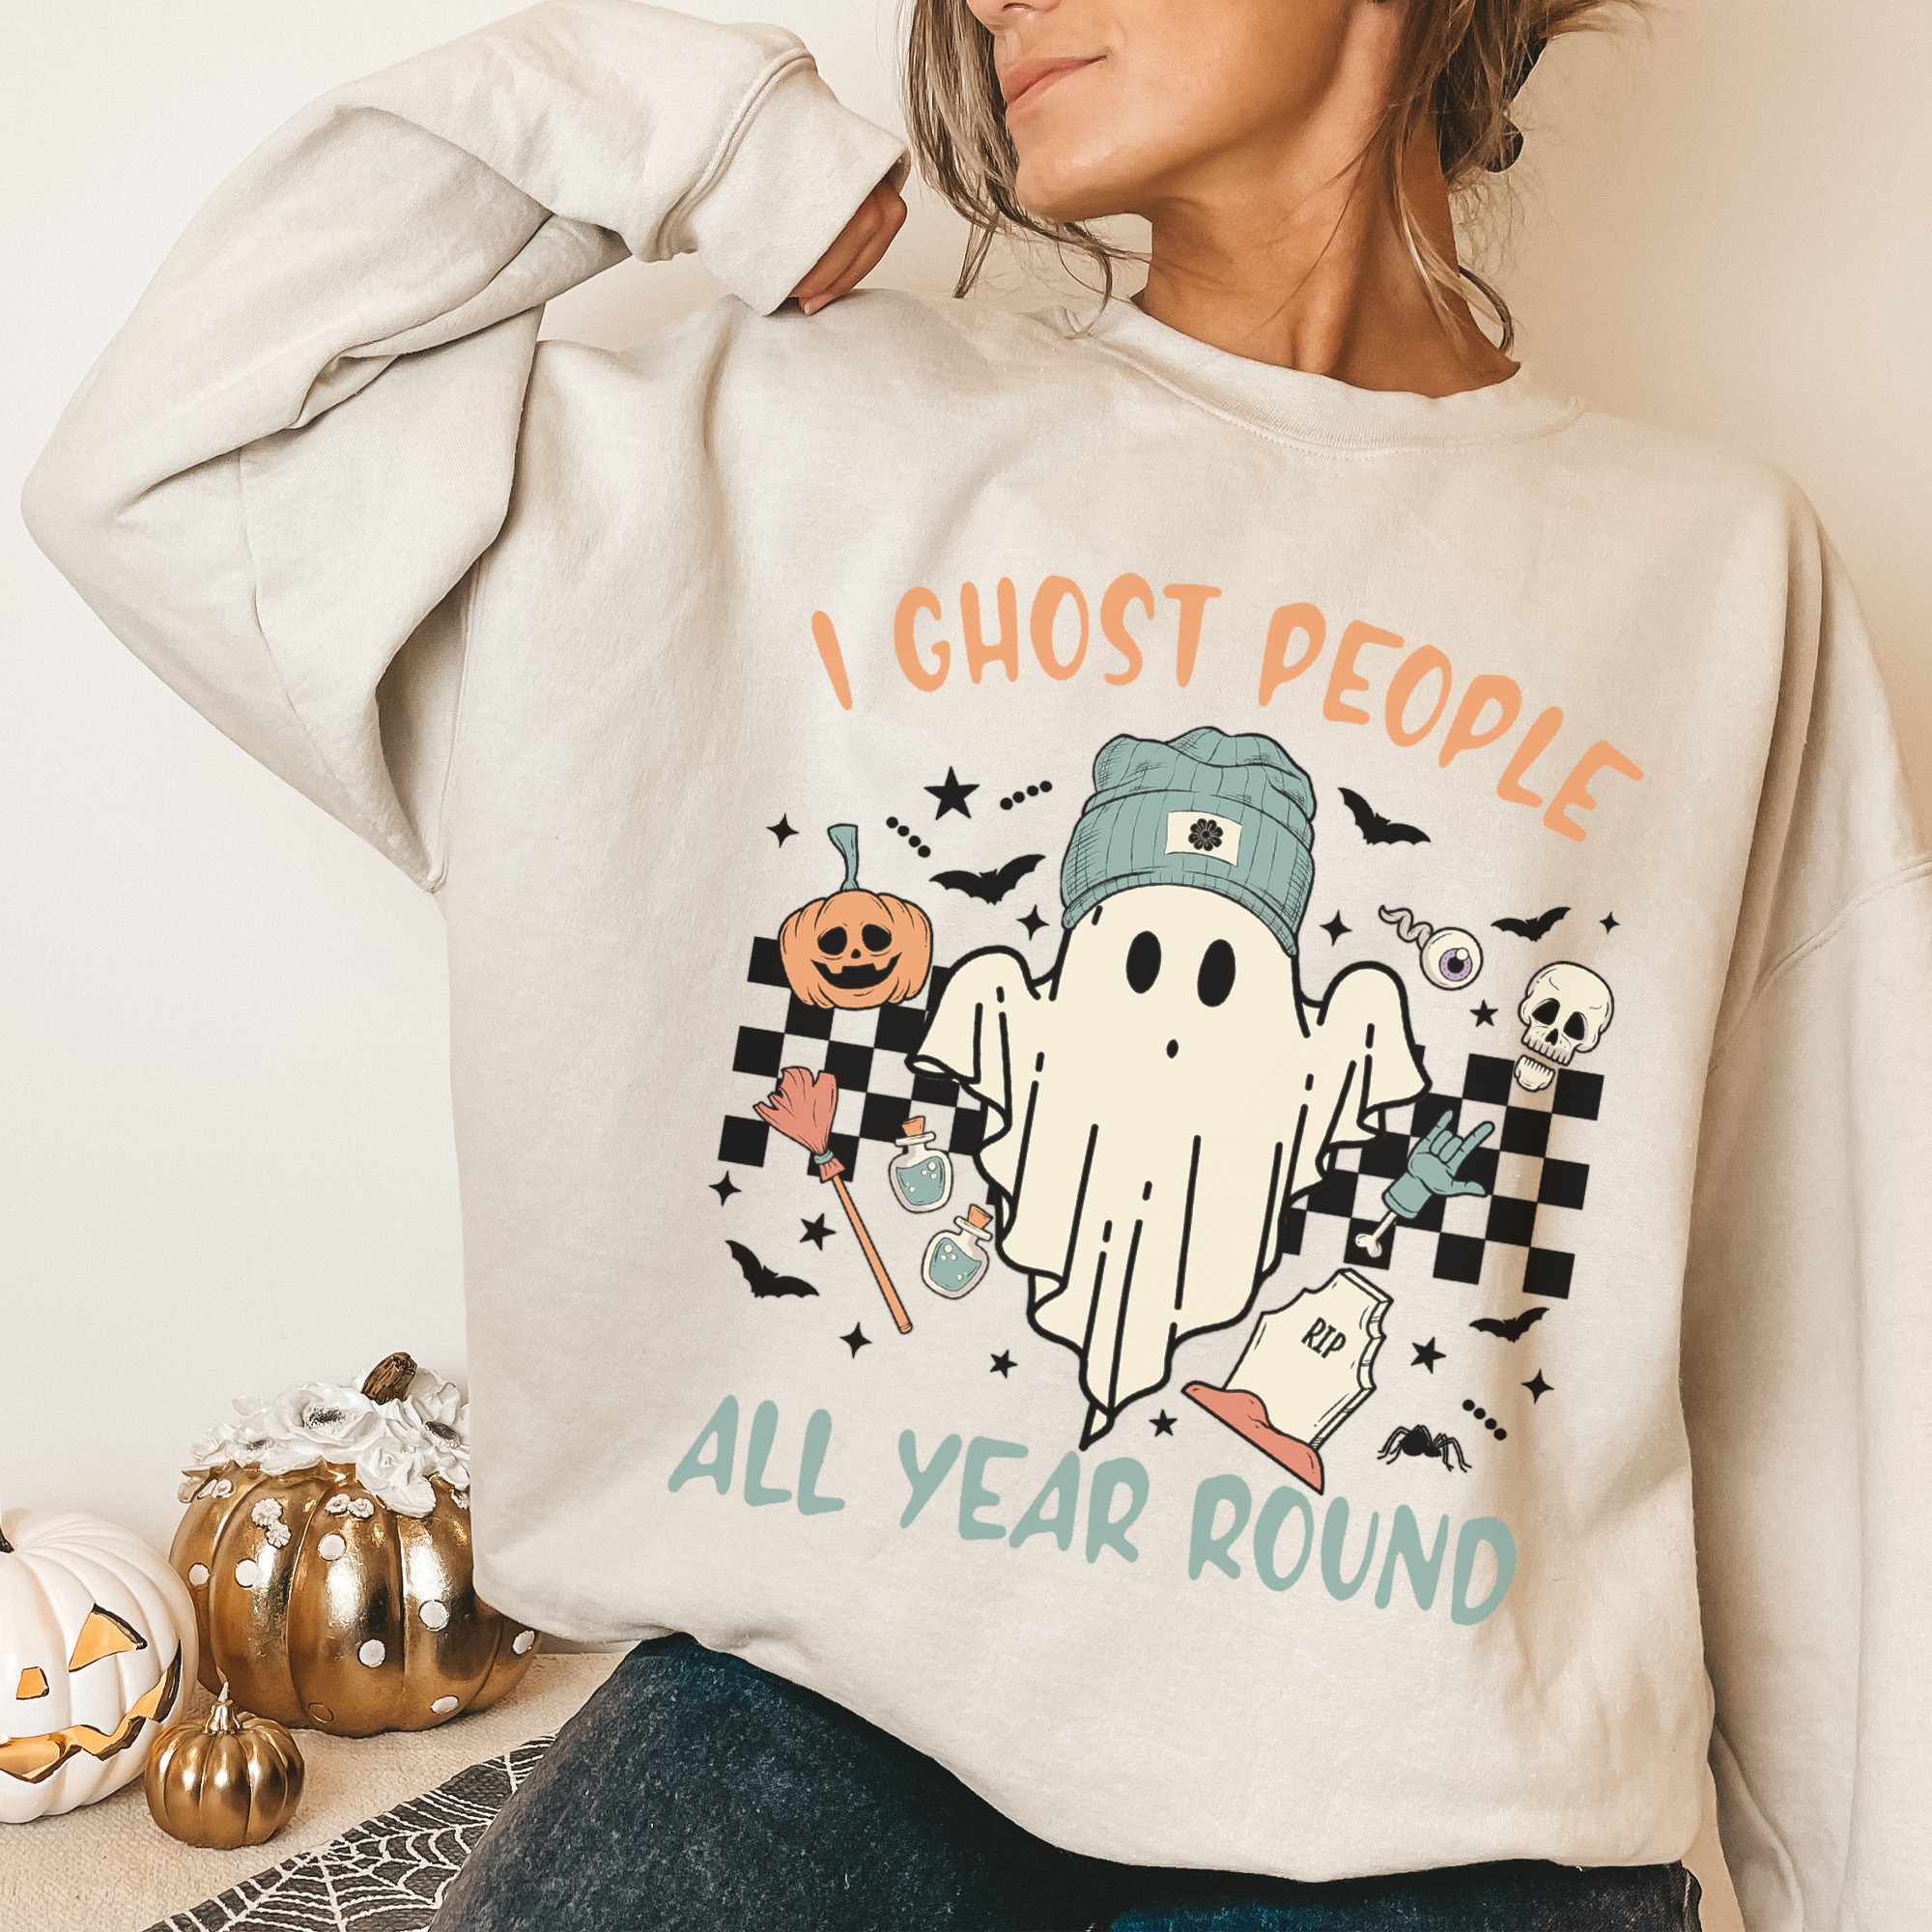 A great Sweatshirt to get in on the Halloween spirit. allSKUs